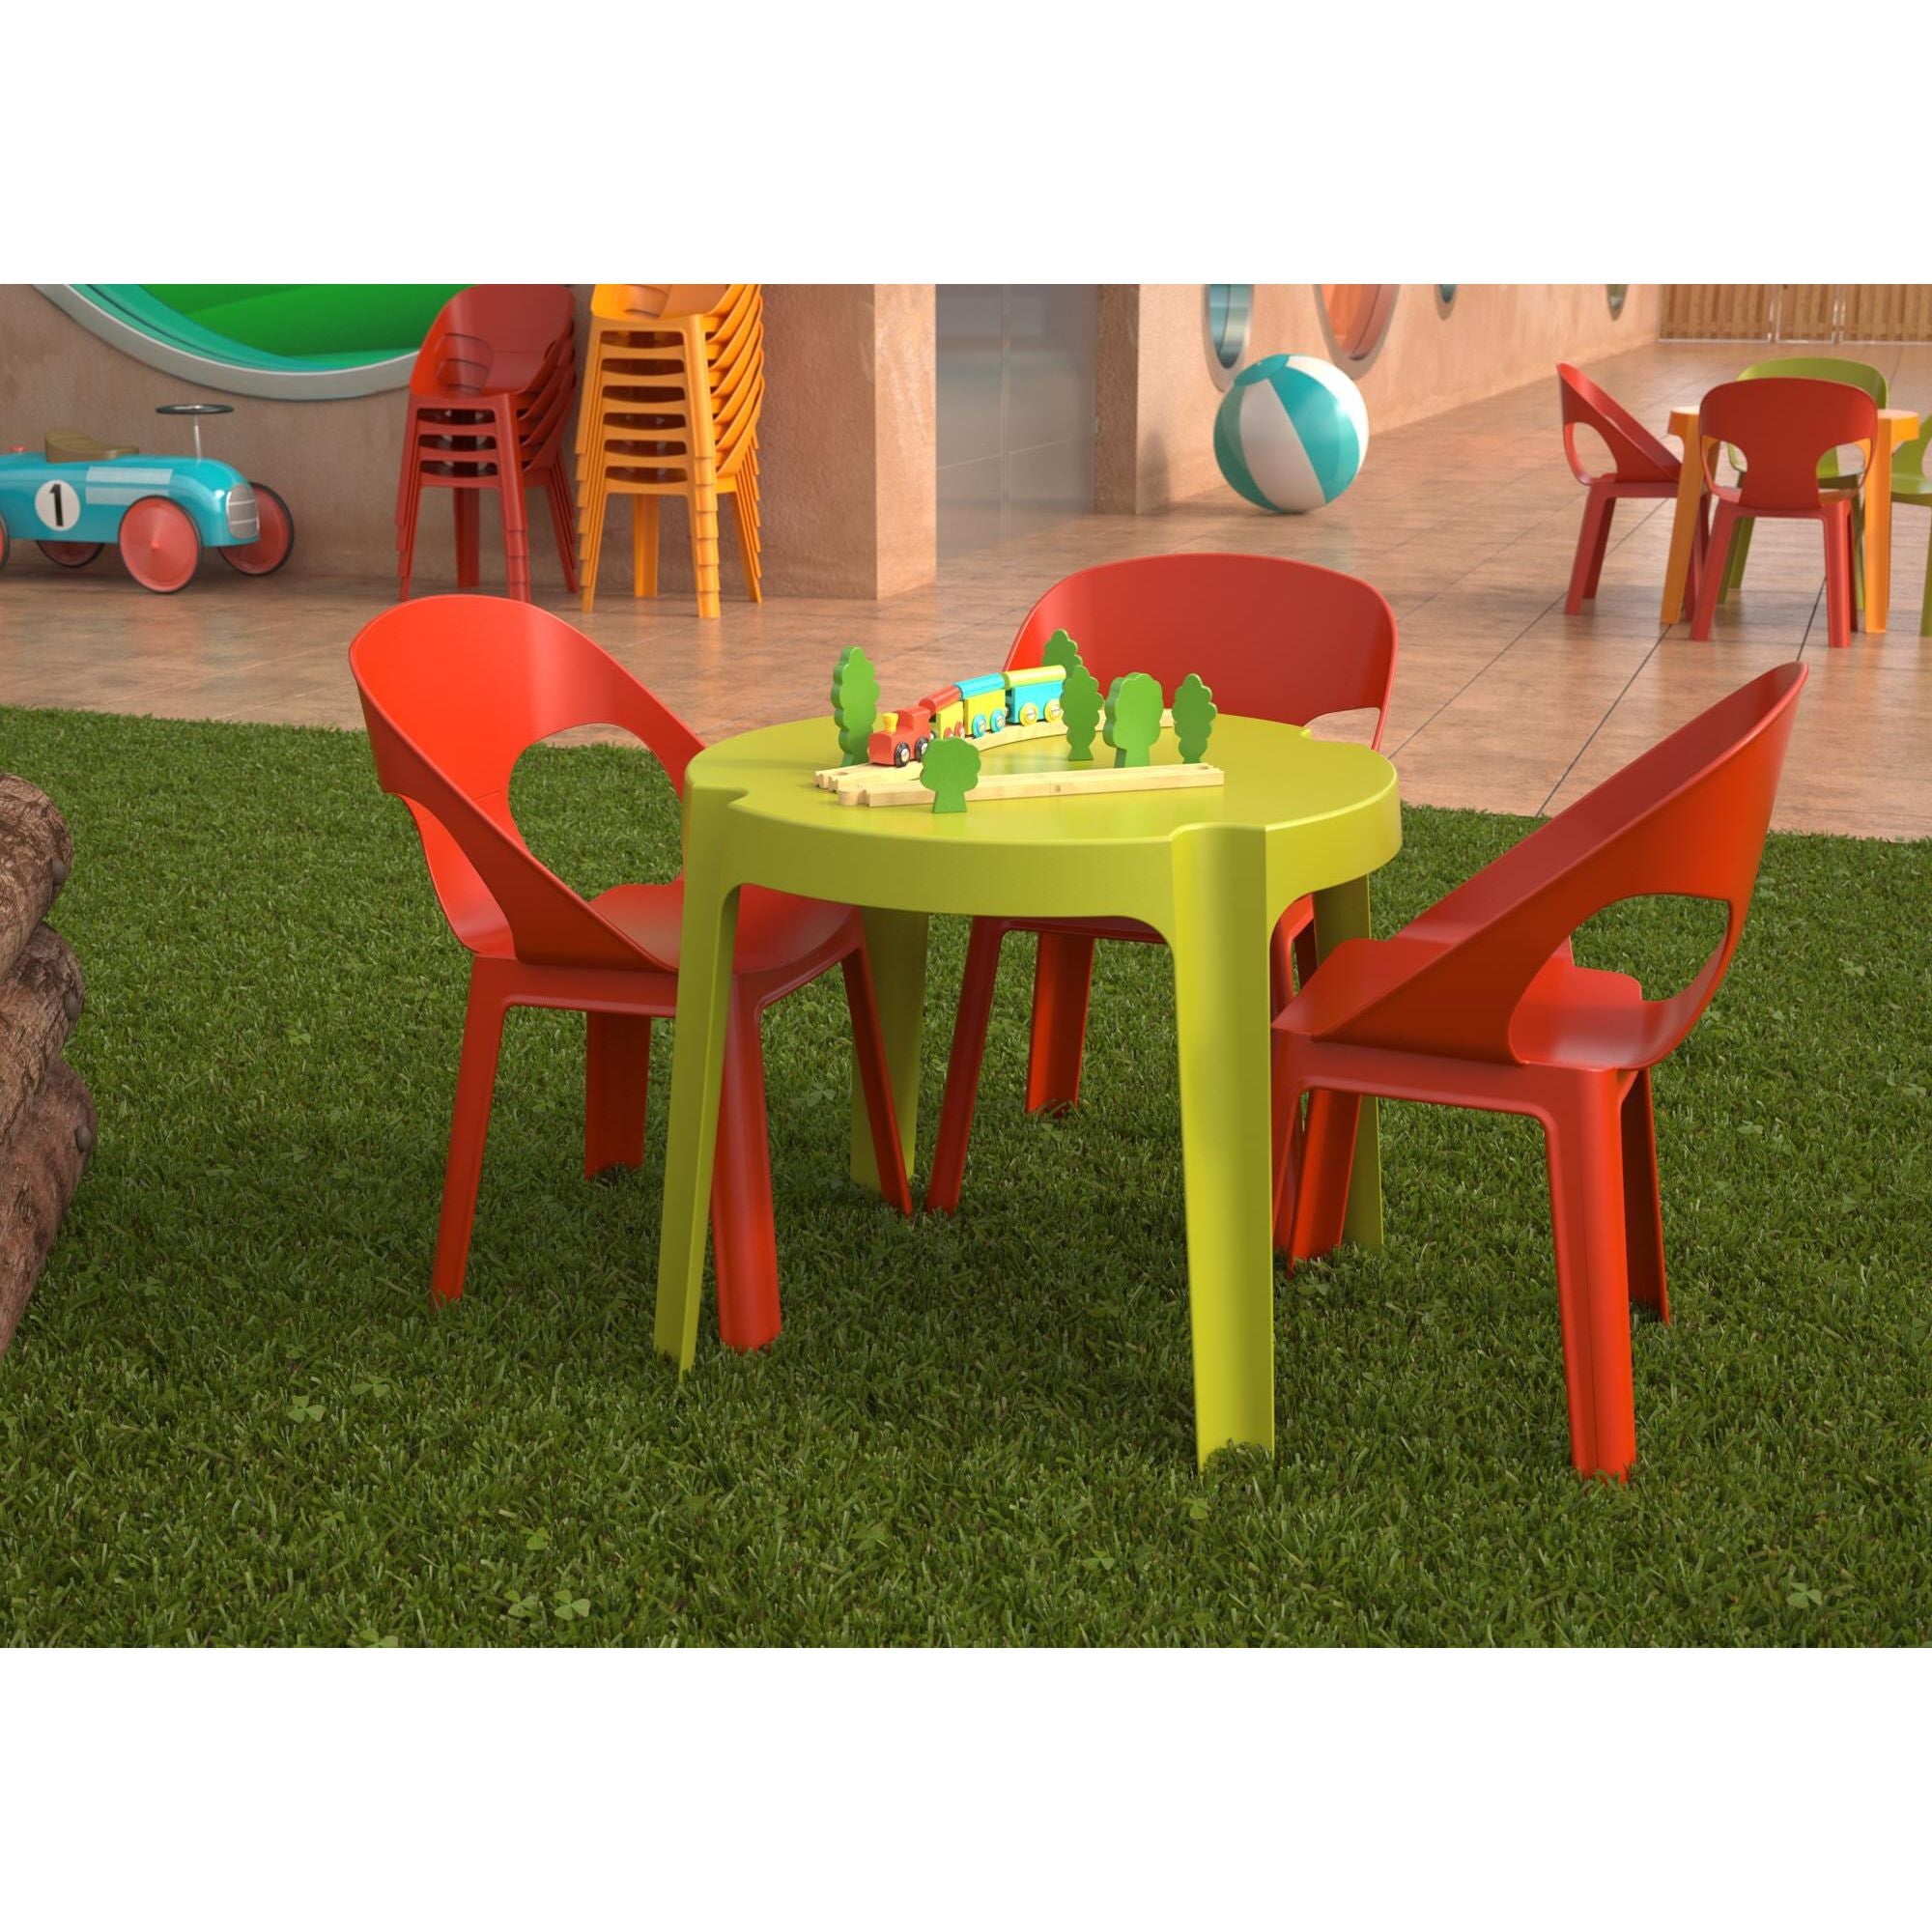 Garbar rita children's table indoors, outdoors 50x50 orange